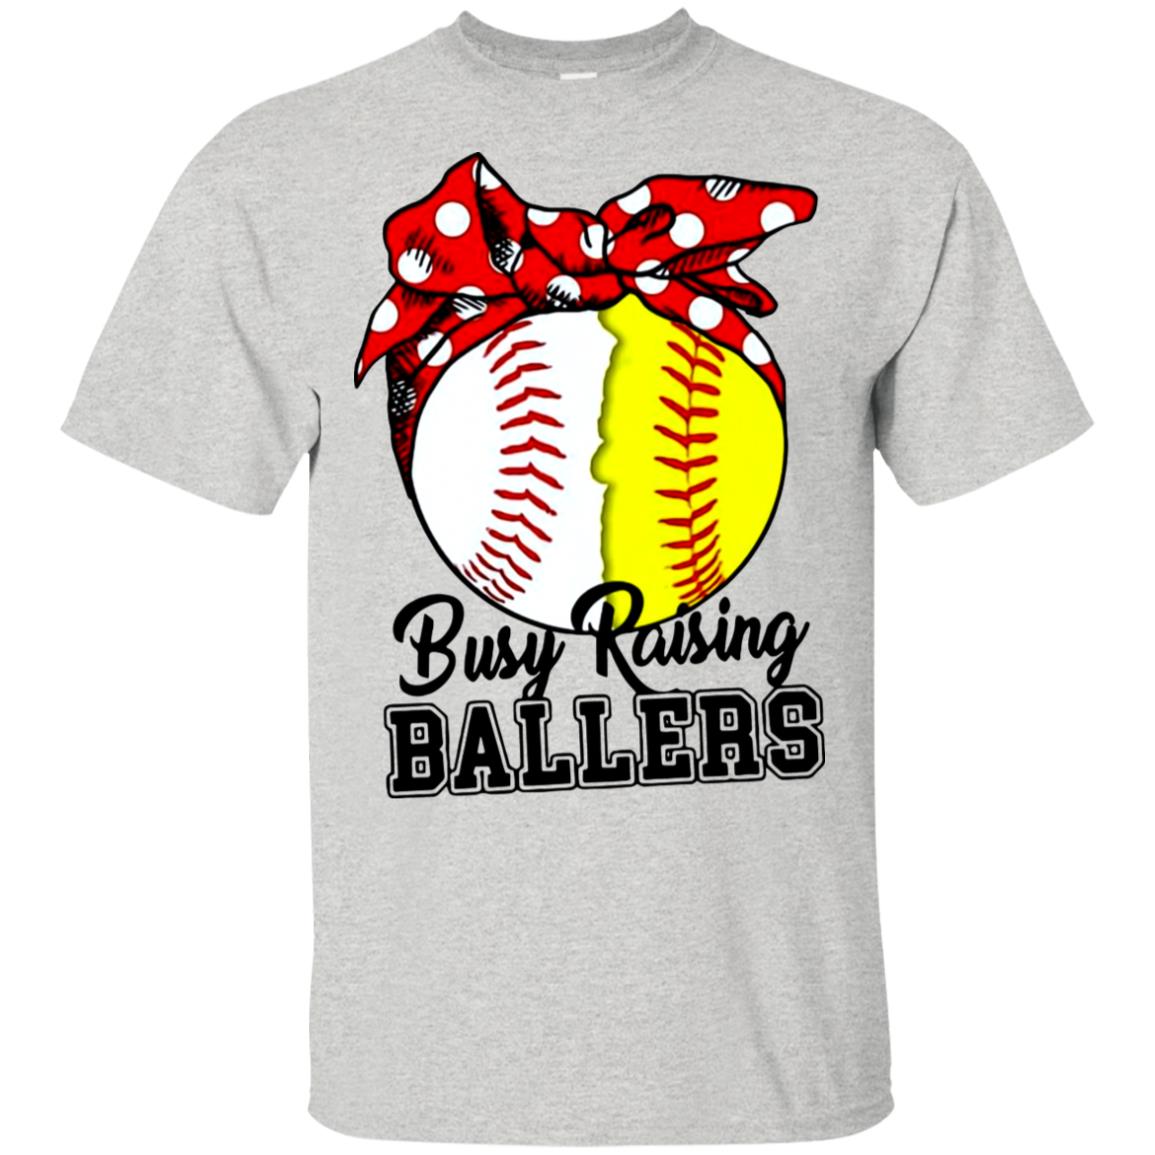 raising ballers shirt